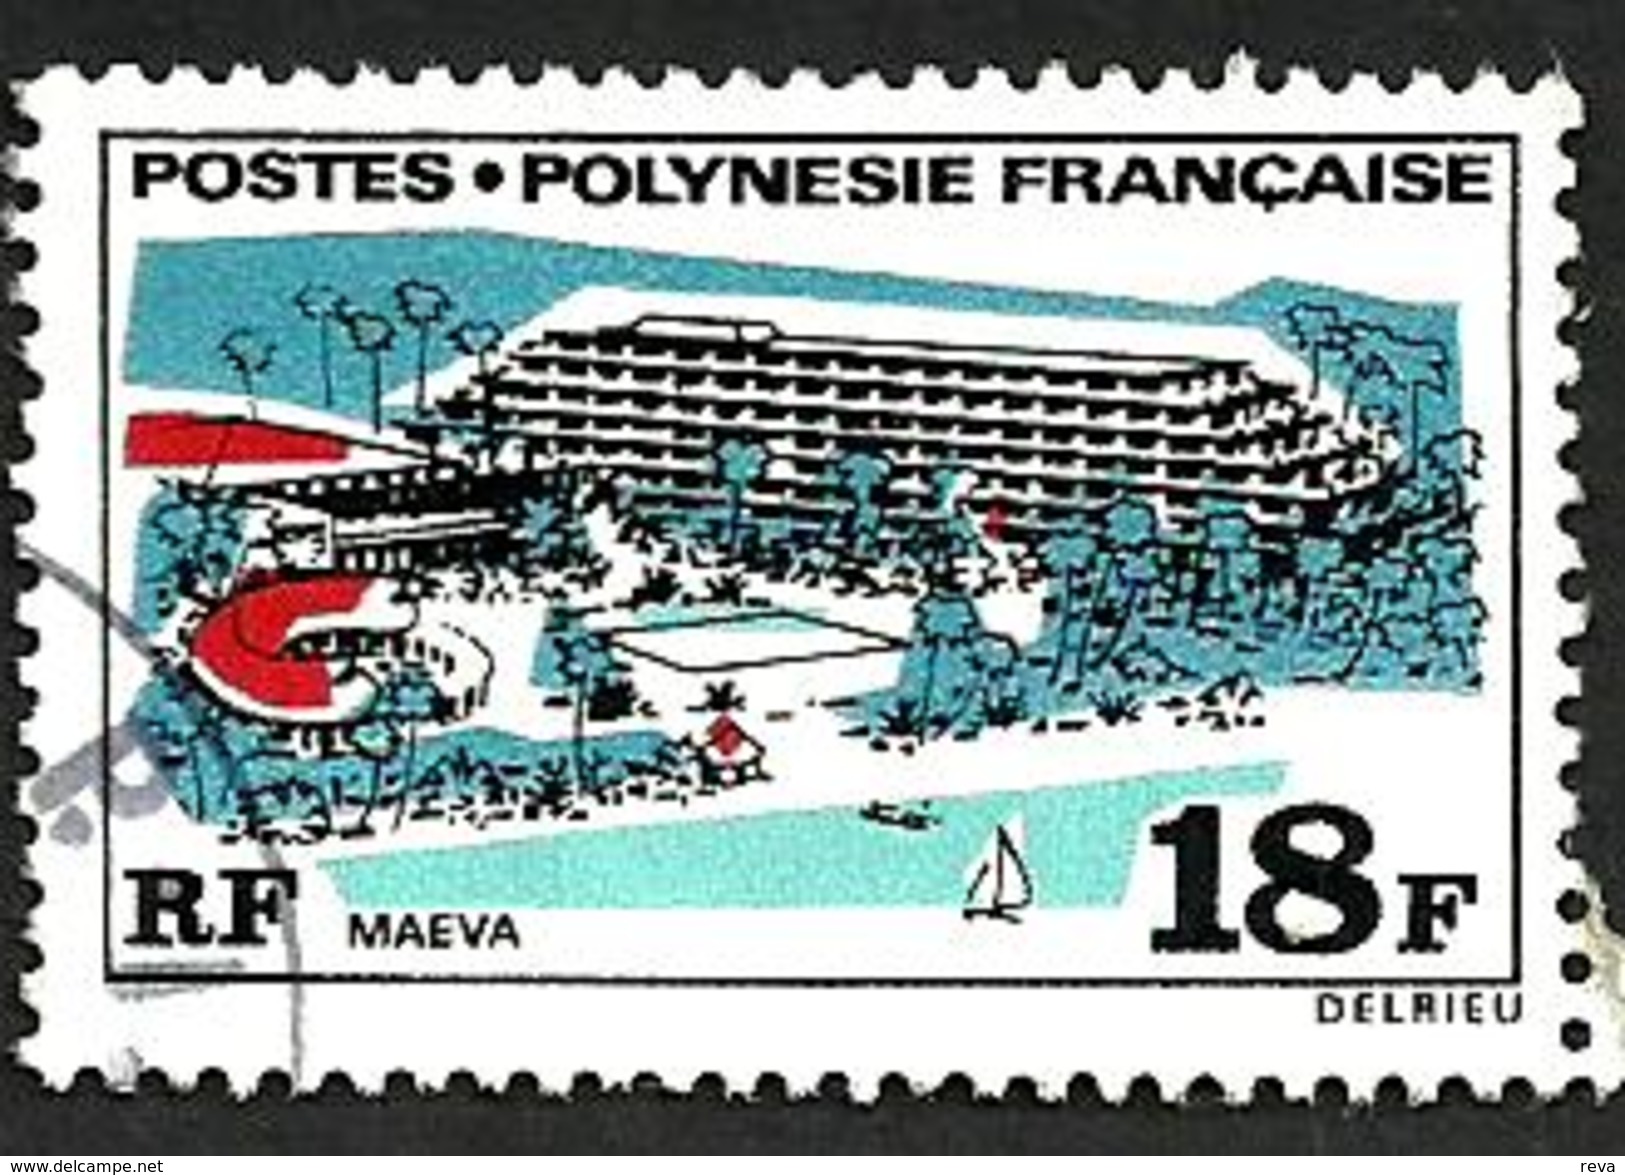 POLYNESIE FRANCAISE MAISON DU TOURISME HOTEL 18 FR STAMP ISSUED 1970's SG107 USED CV£6 READ DESCRIPTION!! - Gebraucht